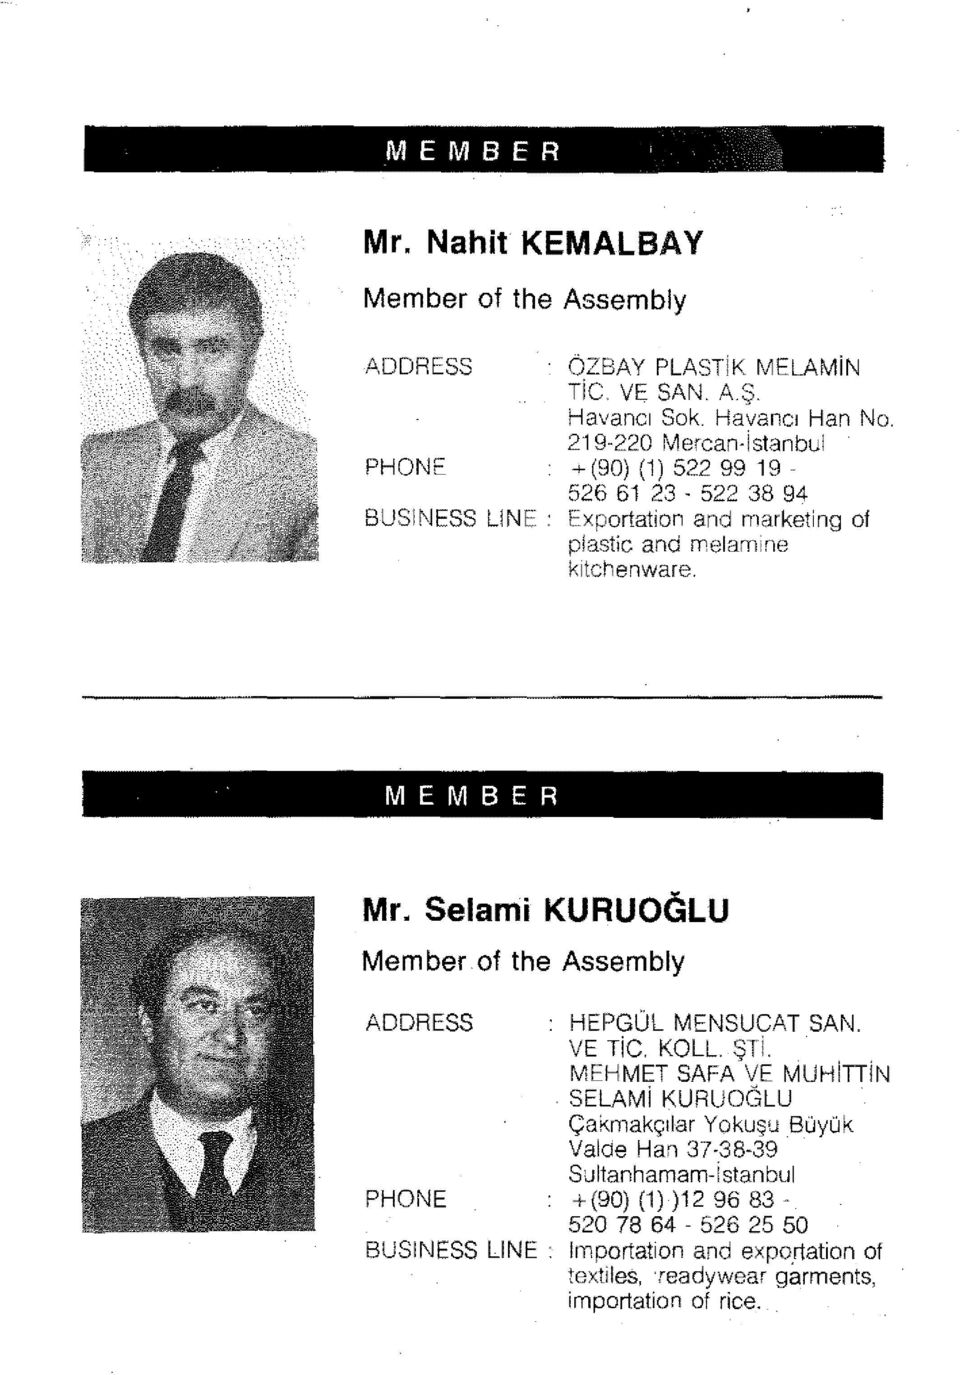 MEMBER Mr. Selam i KURUOGLU Memberof the Assembly ADDRESS HEPGÜL MENSUCAT SAN, VE Tic. KOLL, şti, MEHMET SAFA VE MUHiTTiN.